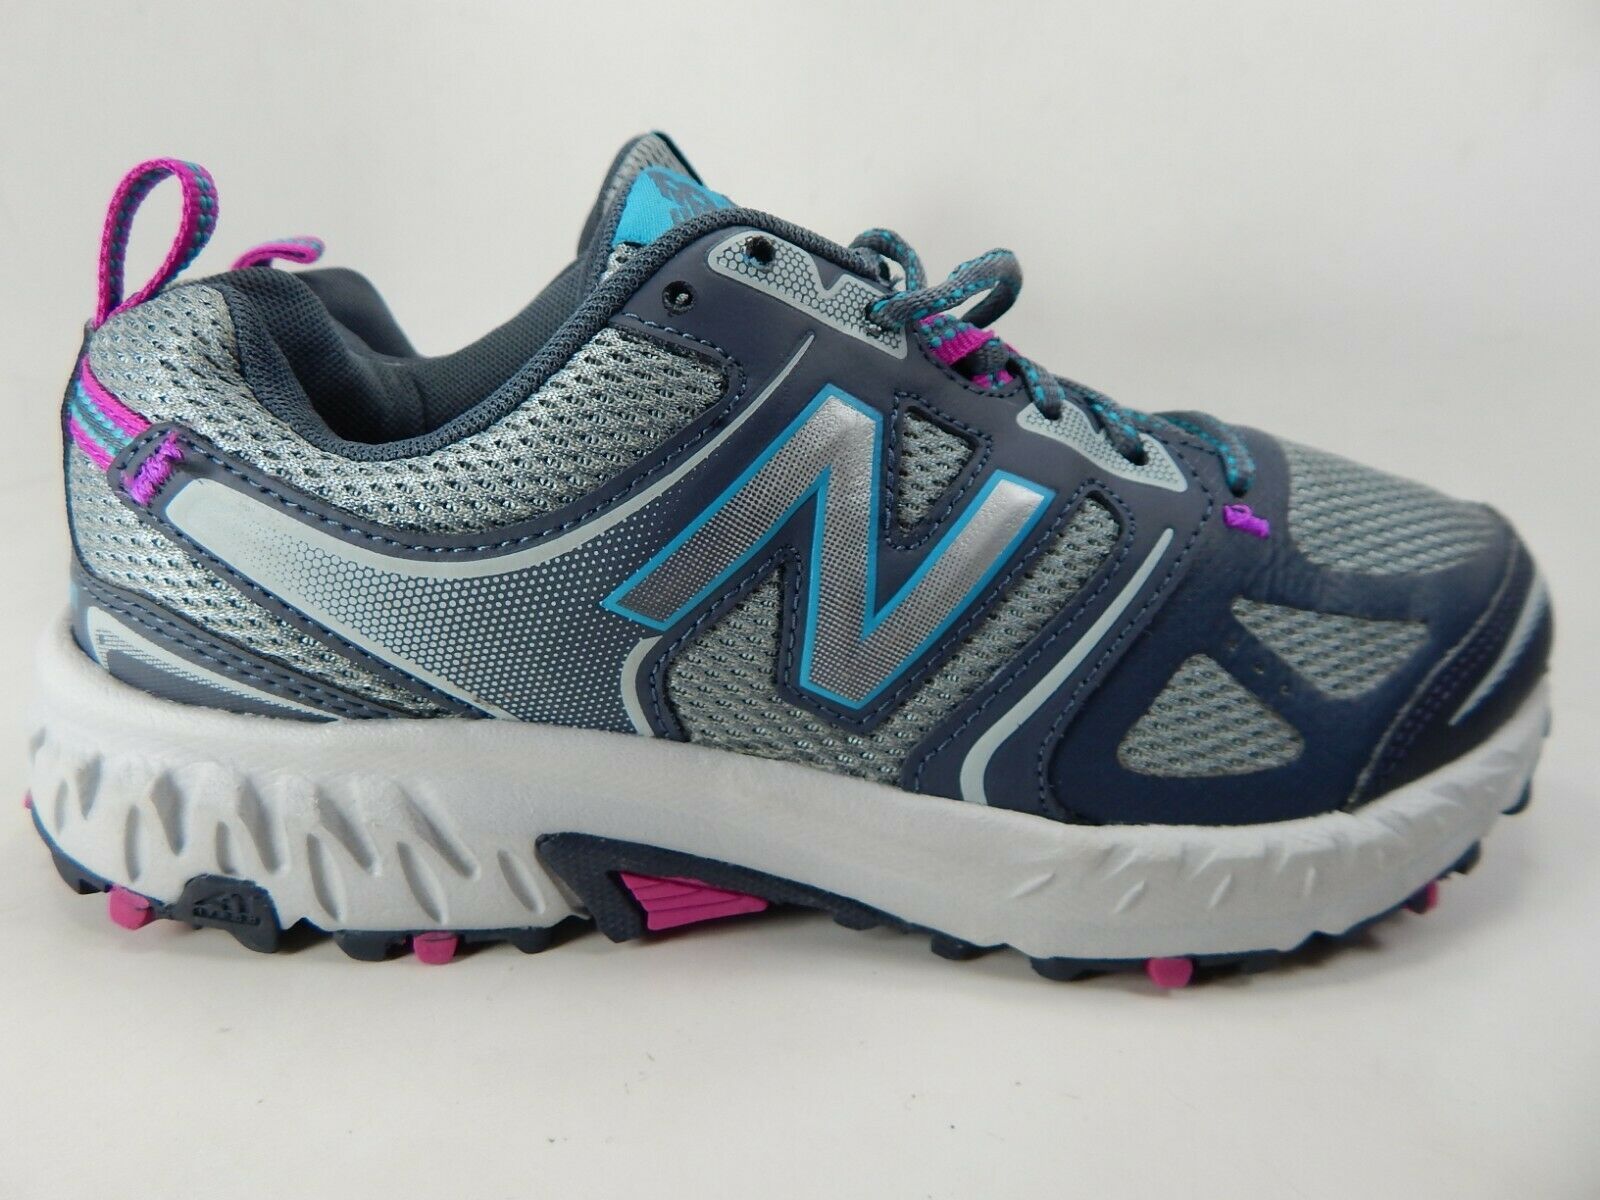 New Balance 412 v3 Size 8 M (B) EU 39 Women's Trail Running Shoes Gray ...